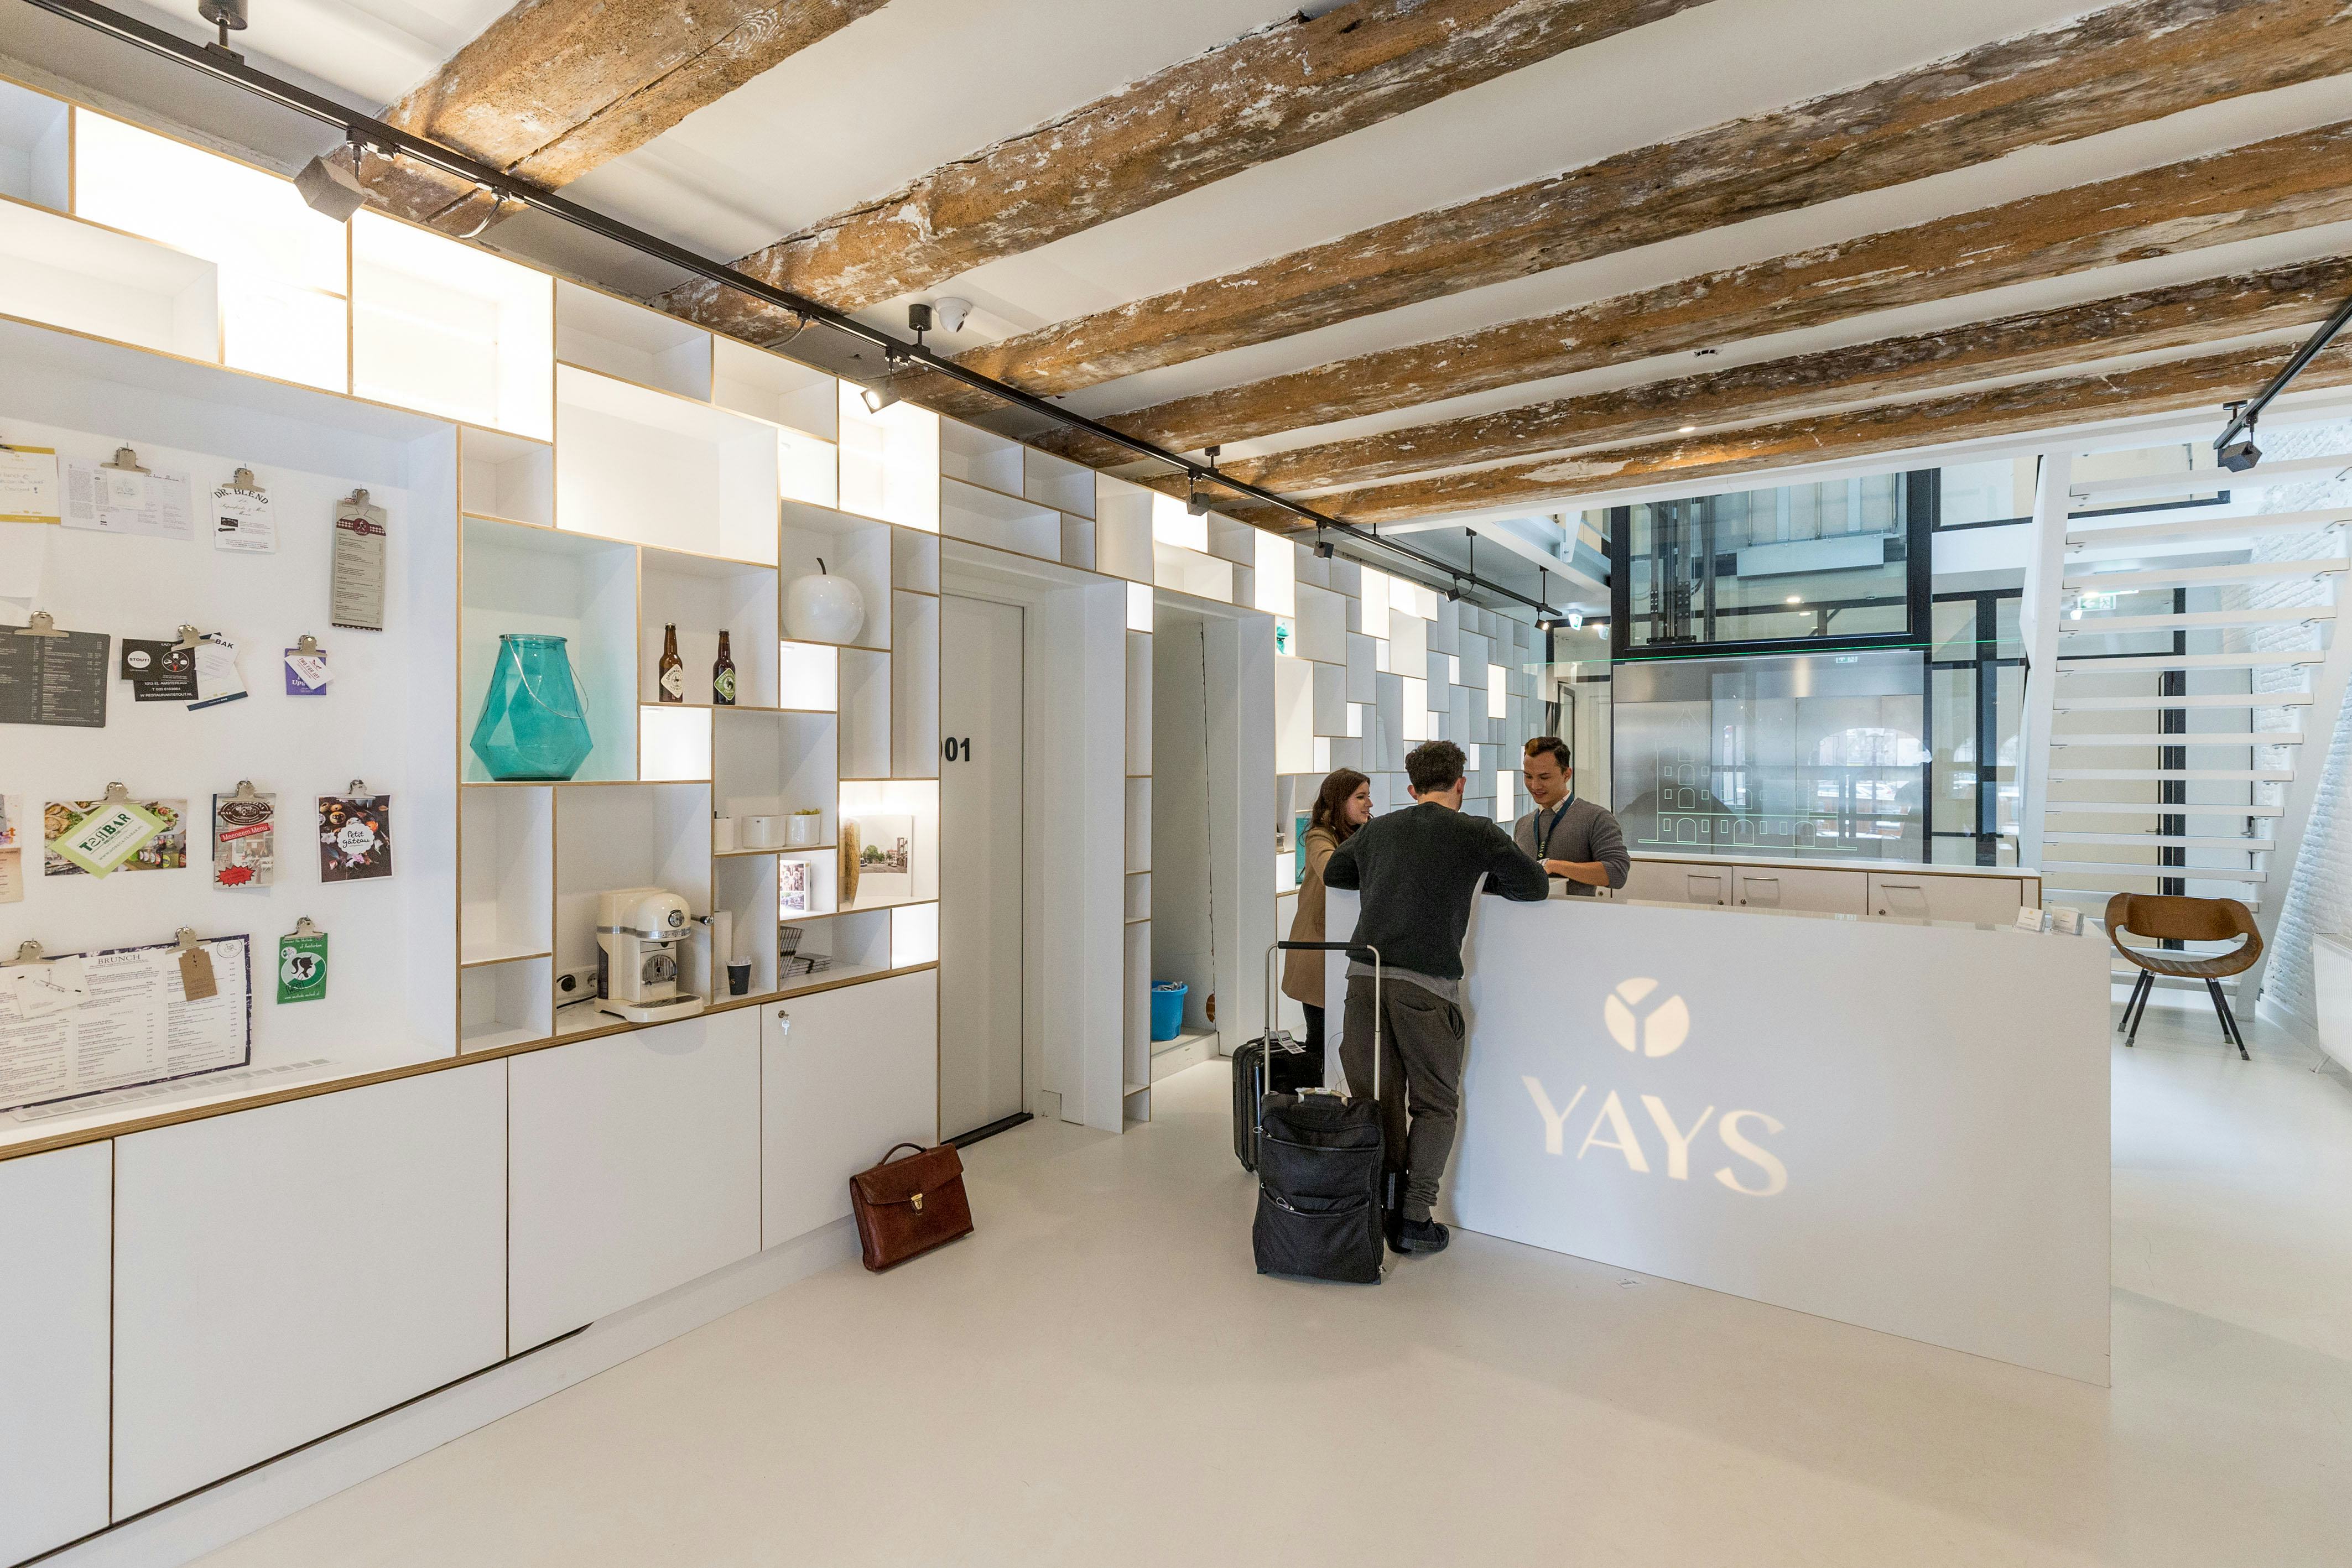 Yays opent 53 serviced appartementen in centrum Den Haag